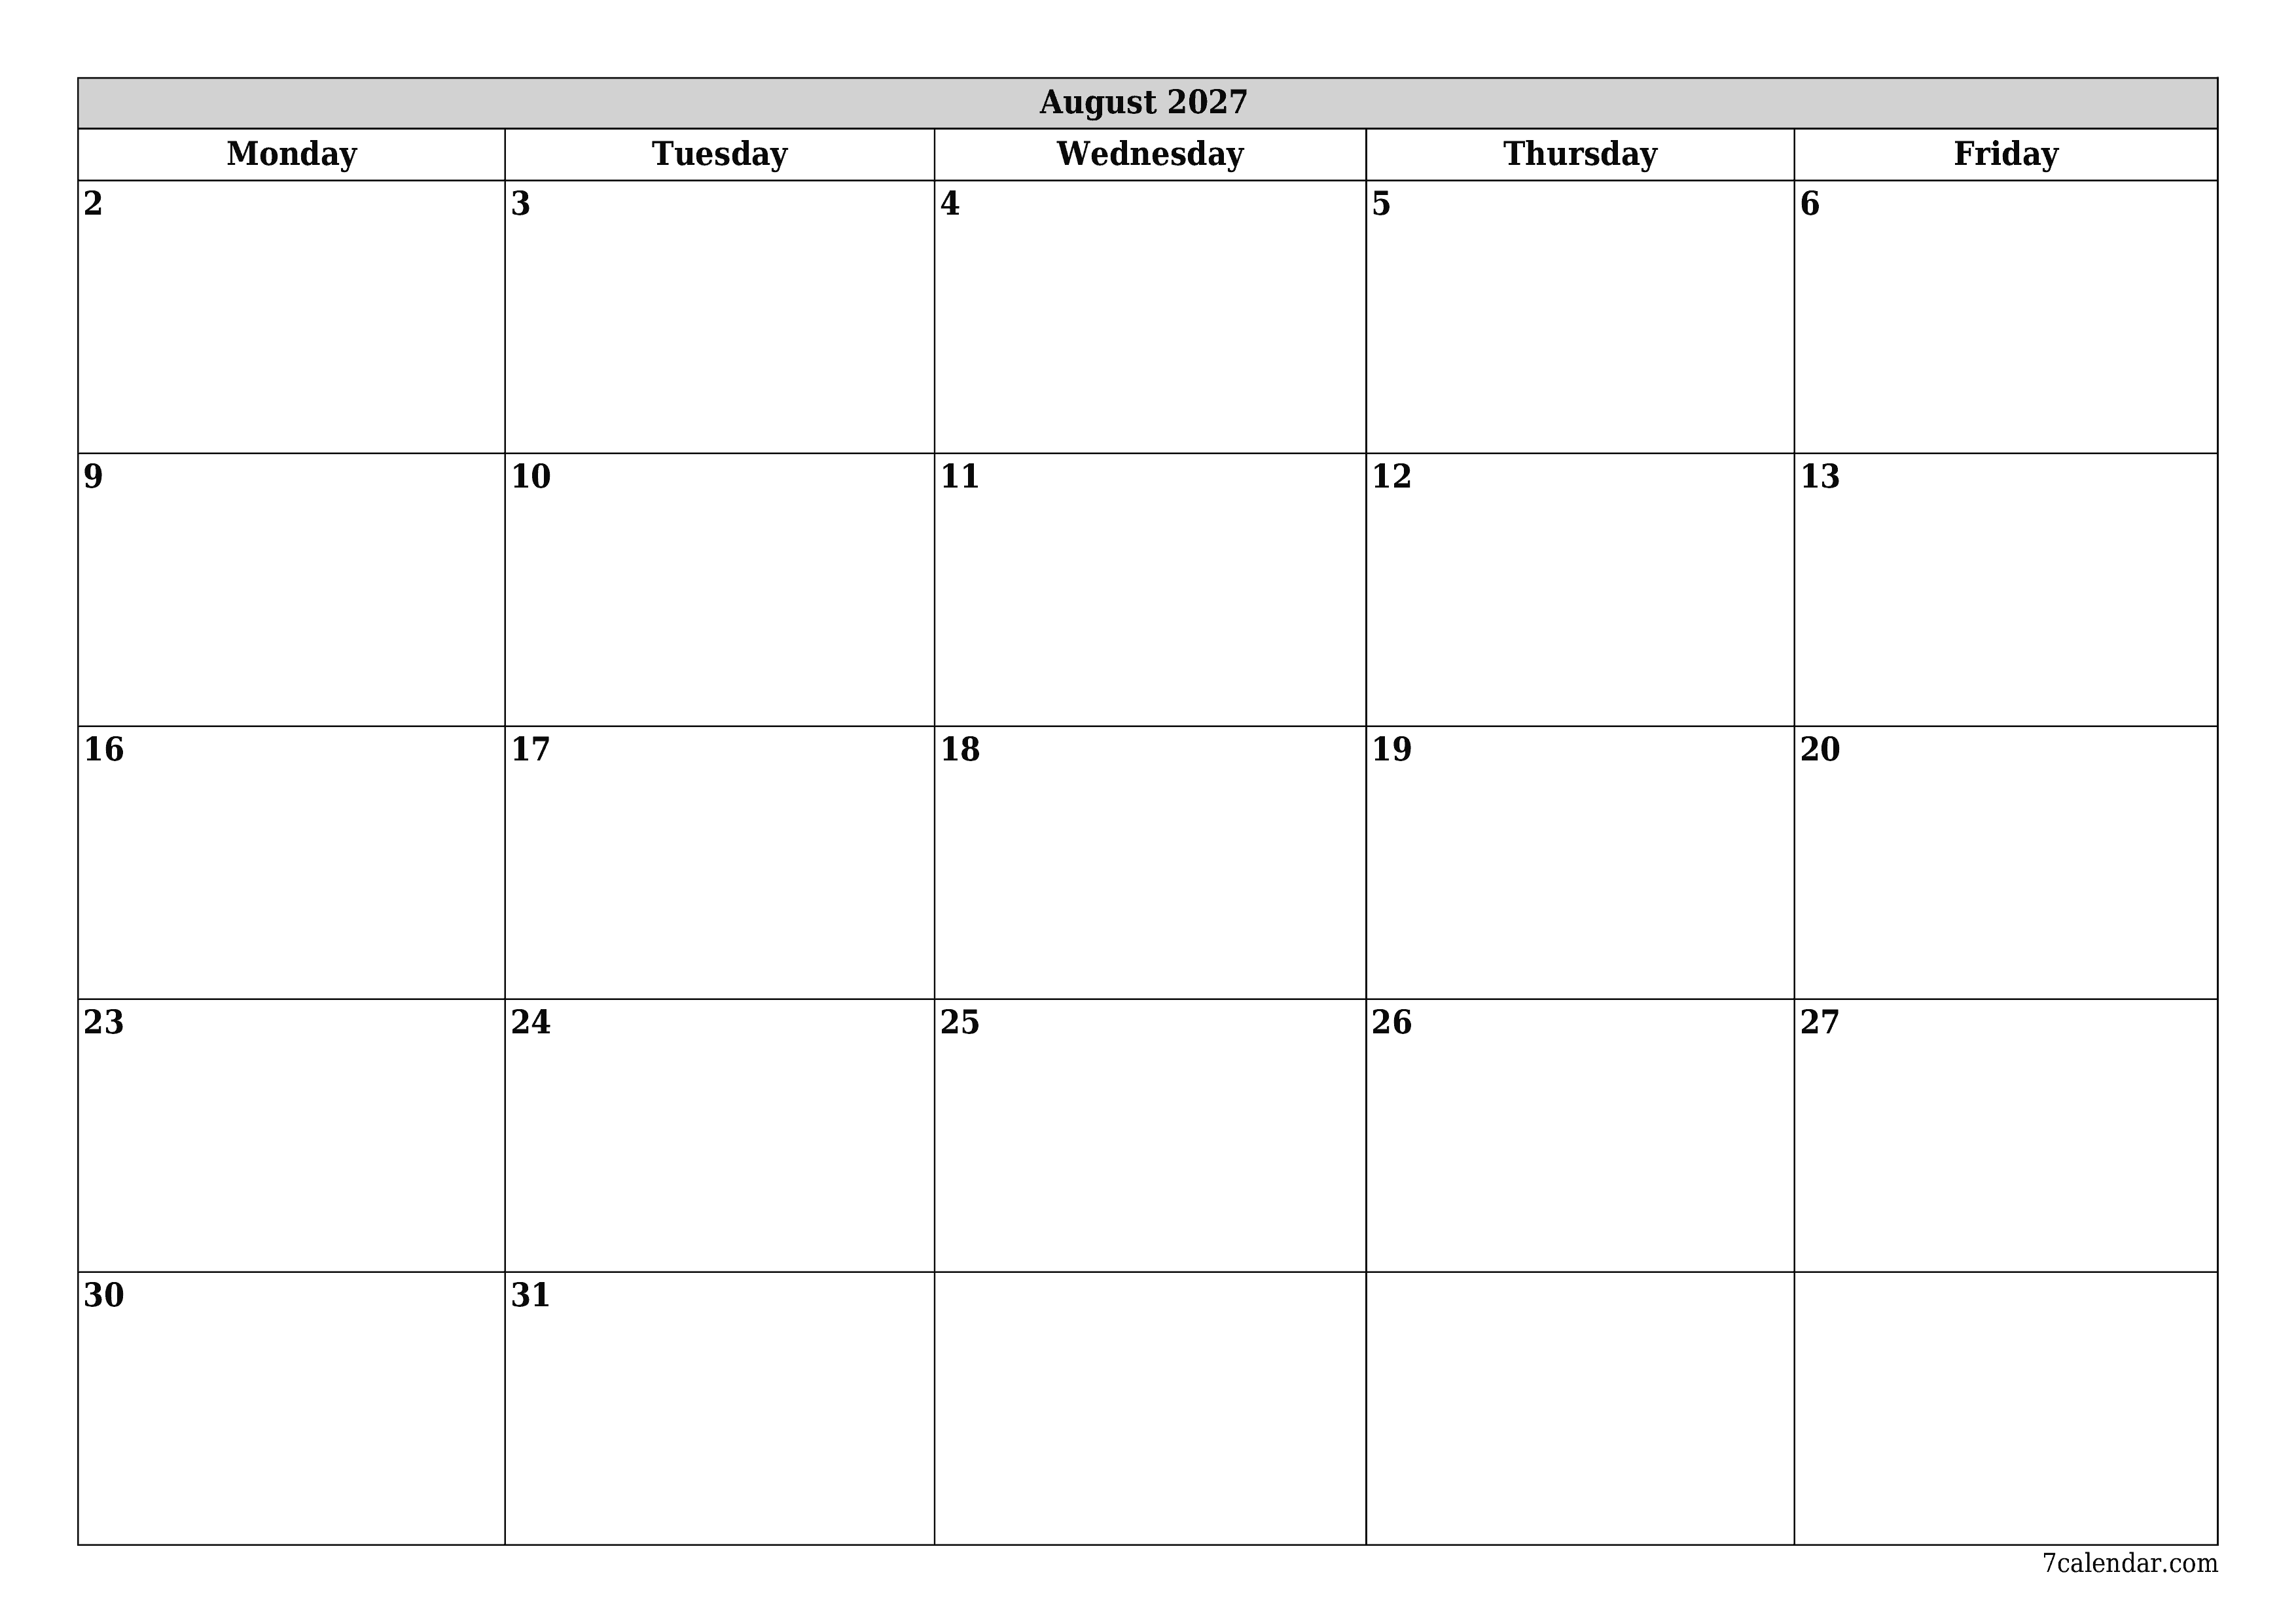 Blank calendar August 2027